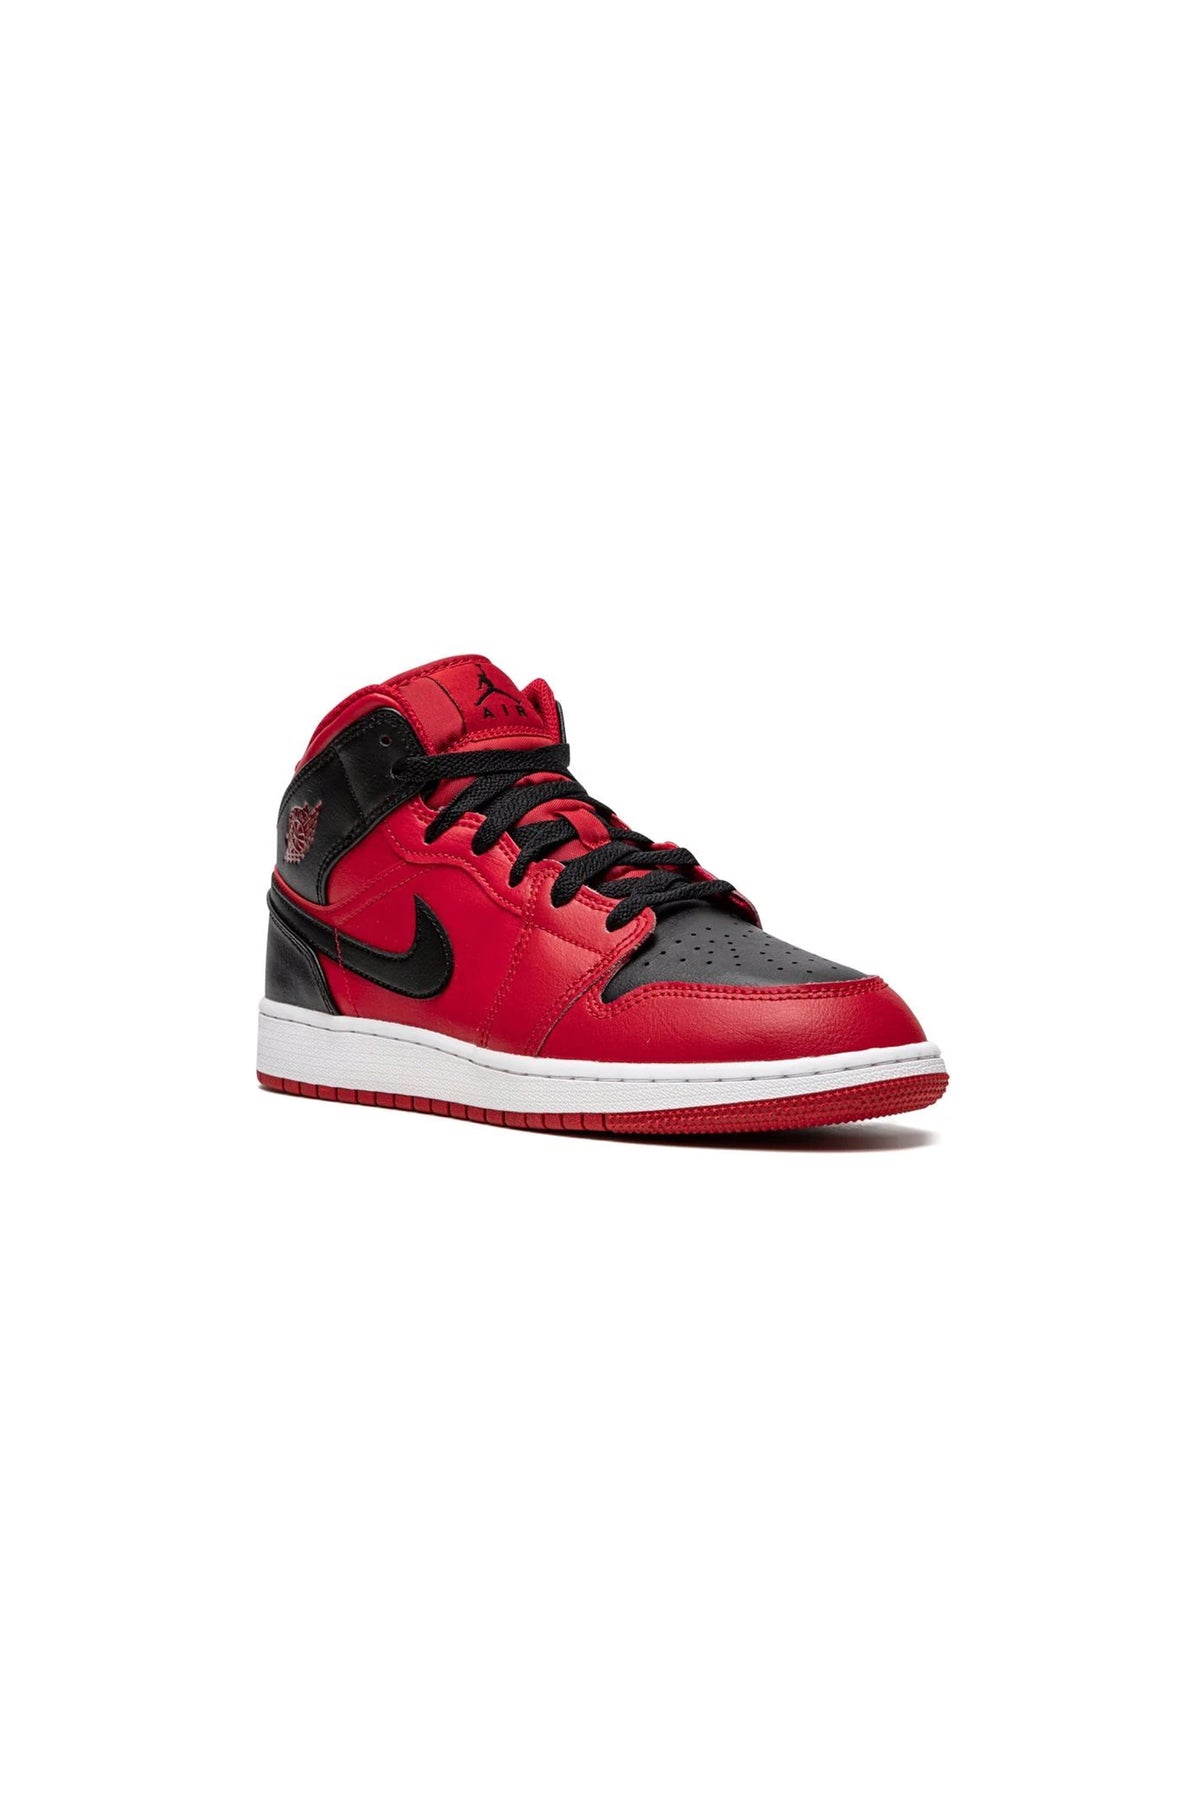 Nike Air Jordan 1 Mid sneakers